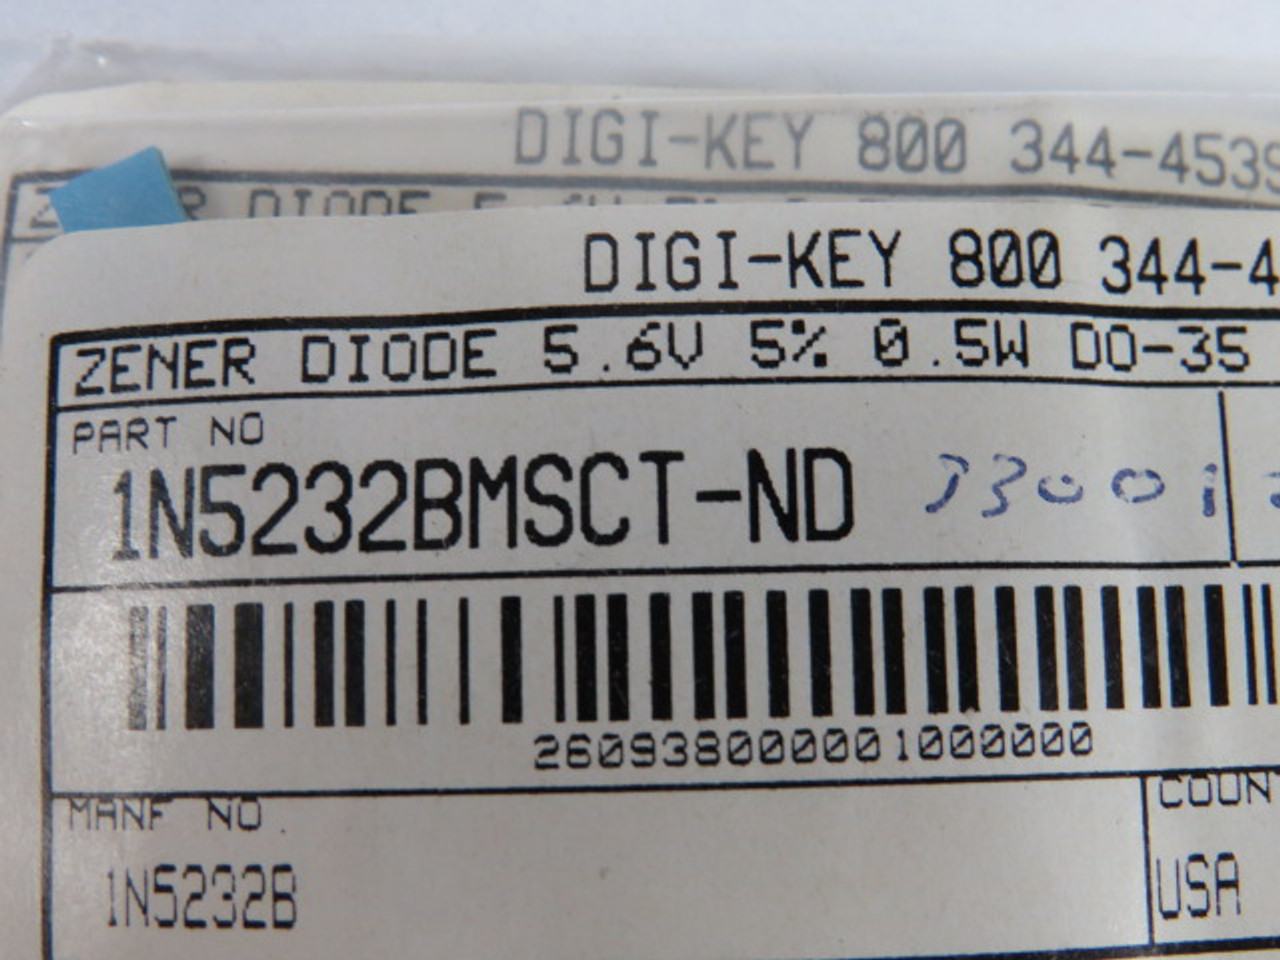 Microsemi Corporation 1N523B Zener Diode 5.6V 5% 0.5W DO-35 Lot of 2 ! NOP !